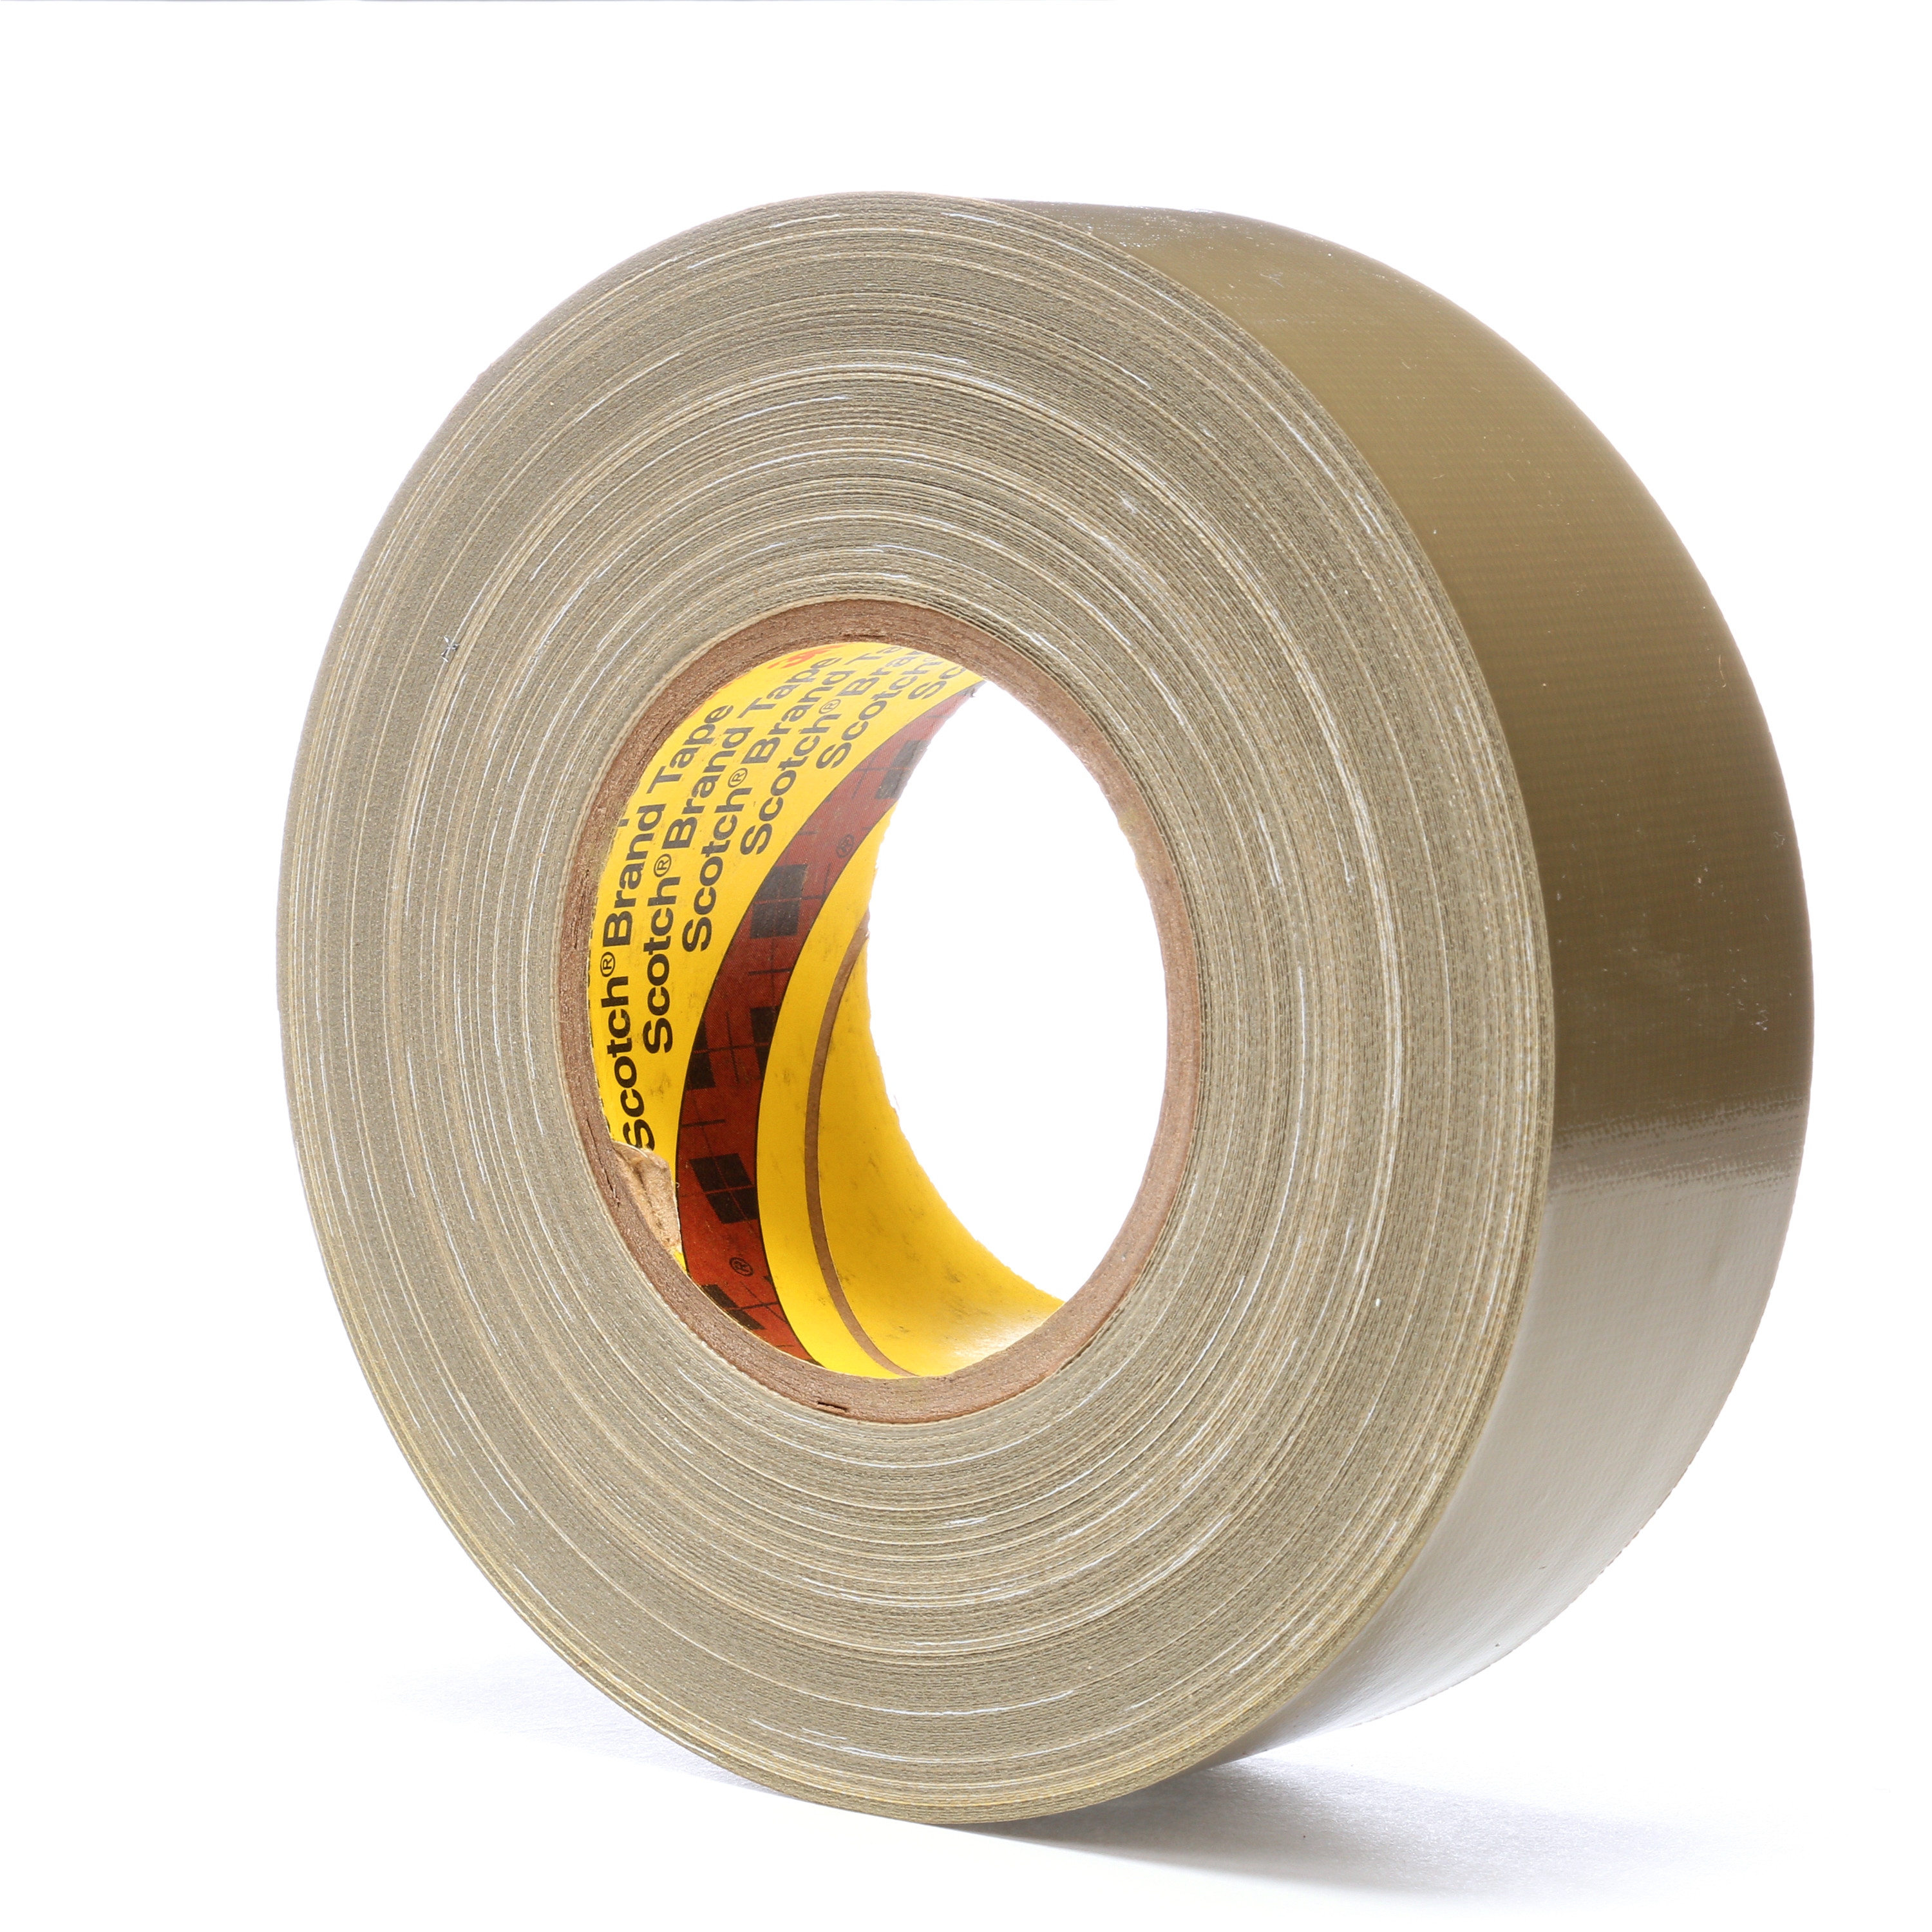 Scotch® Polyethylene Coated Cloth Tape 390, Olive, 48 mm x 54.8 m, 11.7
mil, 24 per case